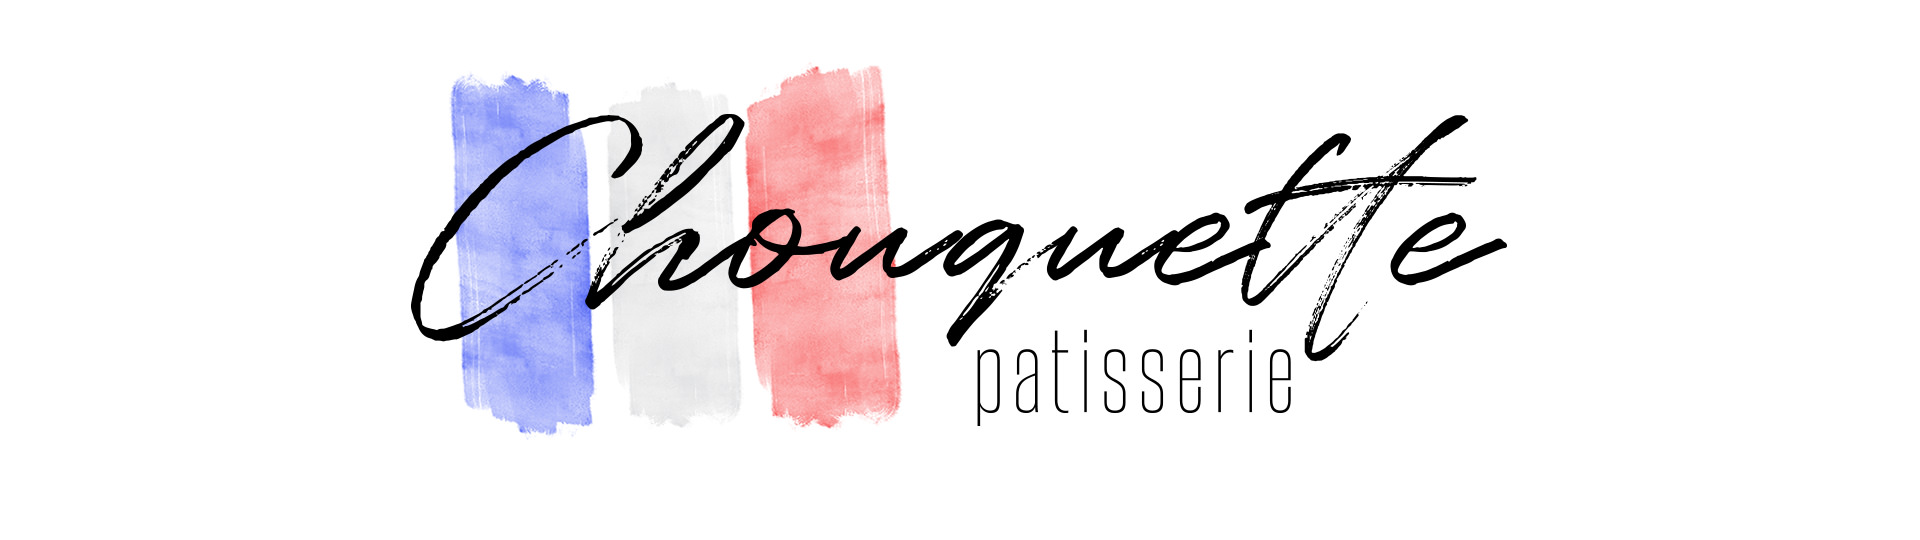 Chouquette Patisserie logo